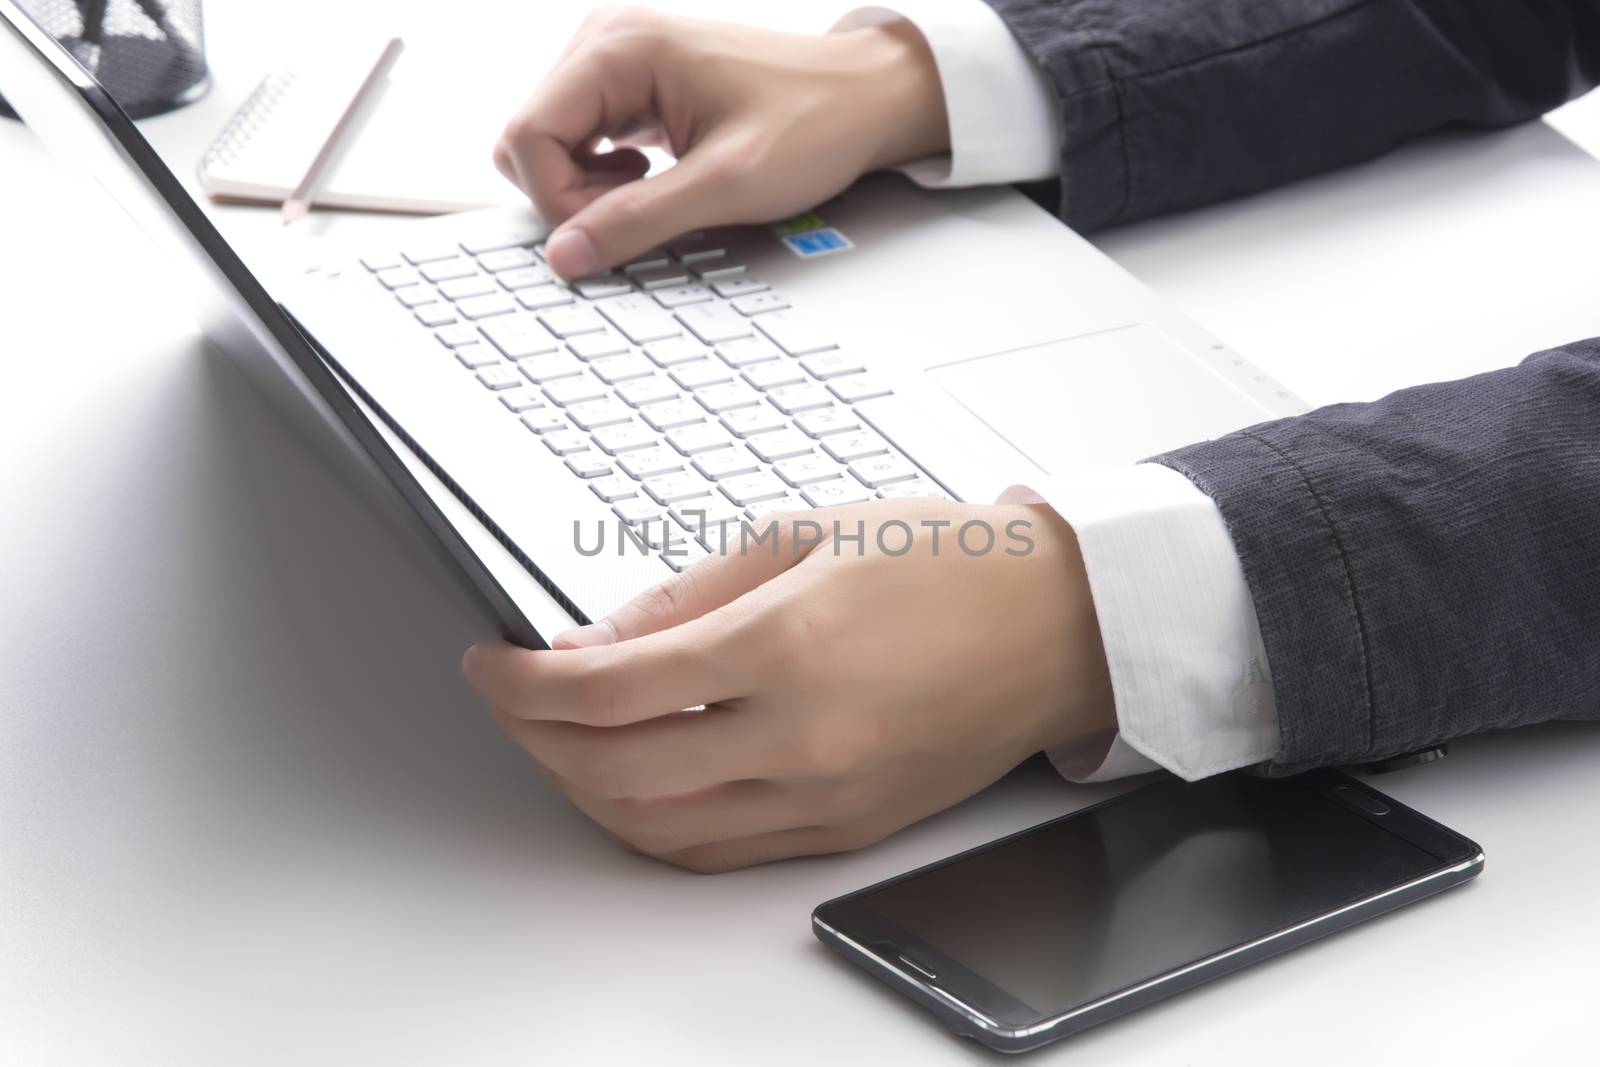 Asian man's hands typing on laptop keyboard